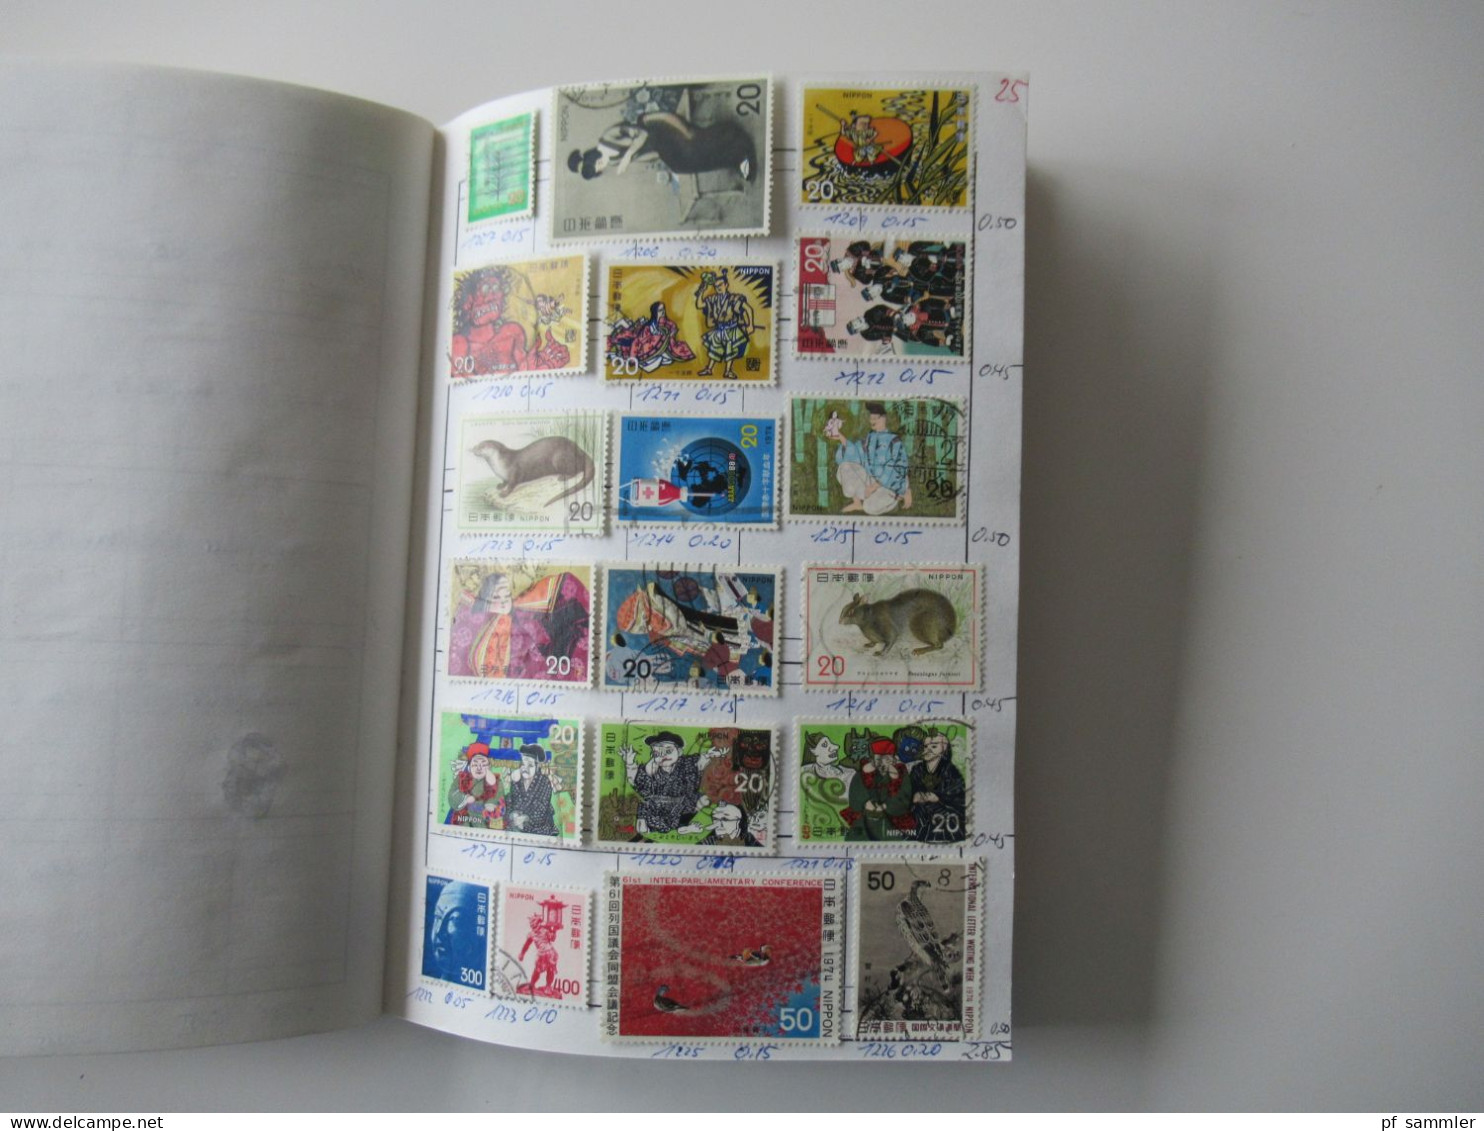 Sammlung / 2x Auswahlheft Asien Japan ab Semiklassik - ca. 1996 viele gestempelte Marken / absolute Fundgrube!! Motive